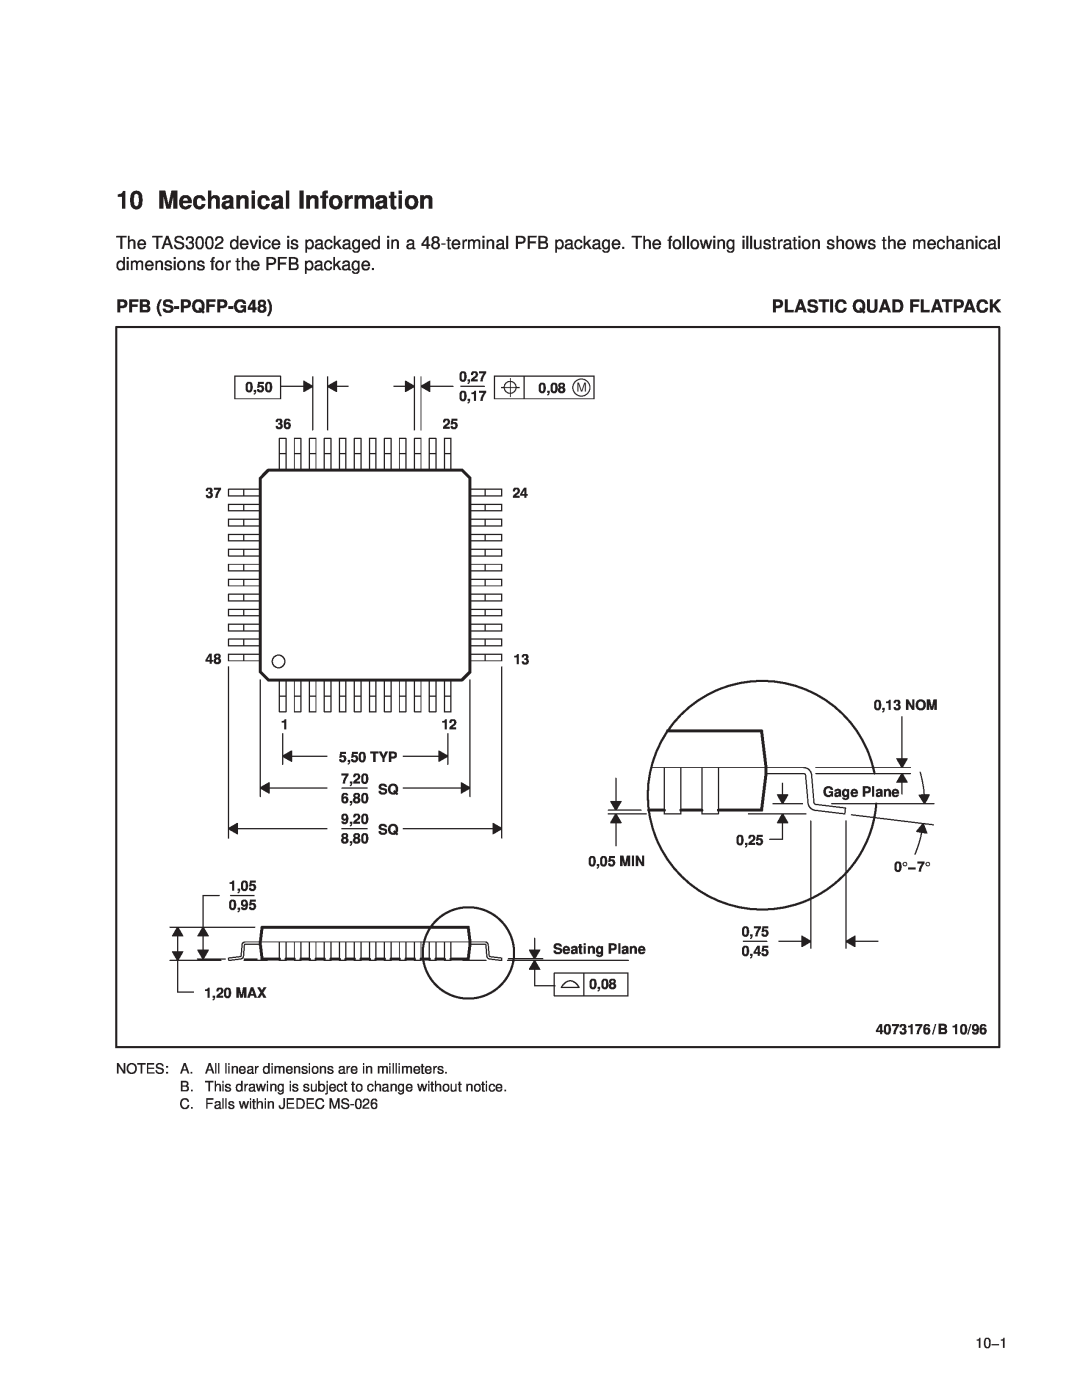 Texas Instruments TAS3002 manual Mechanical Information, PFB S-PQFP-G48, Plastic Quad Flatpack 